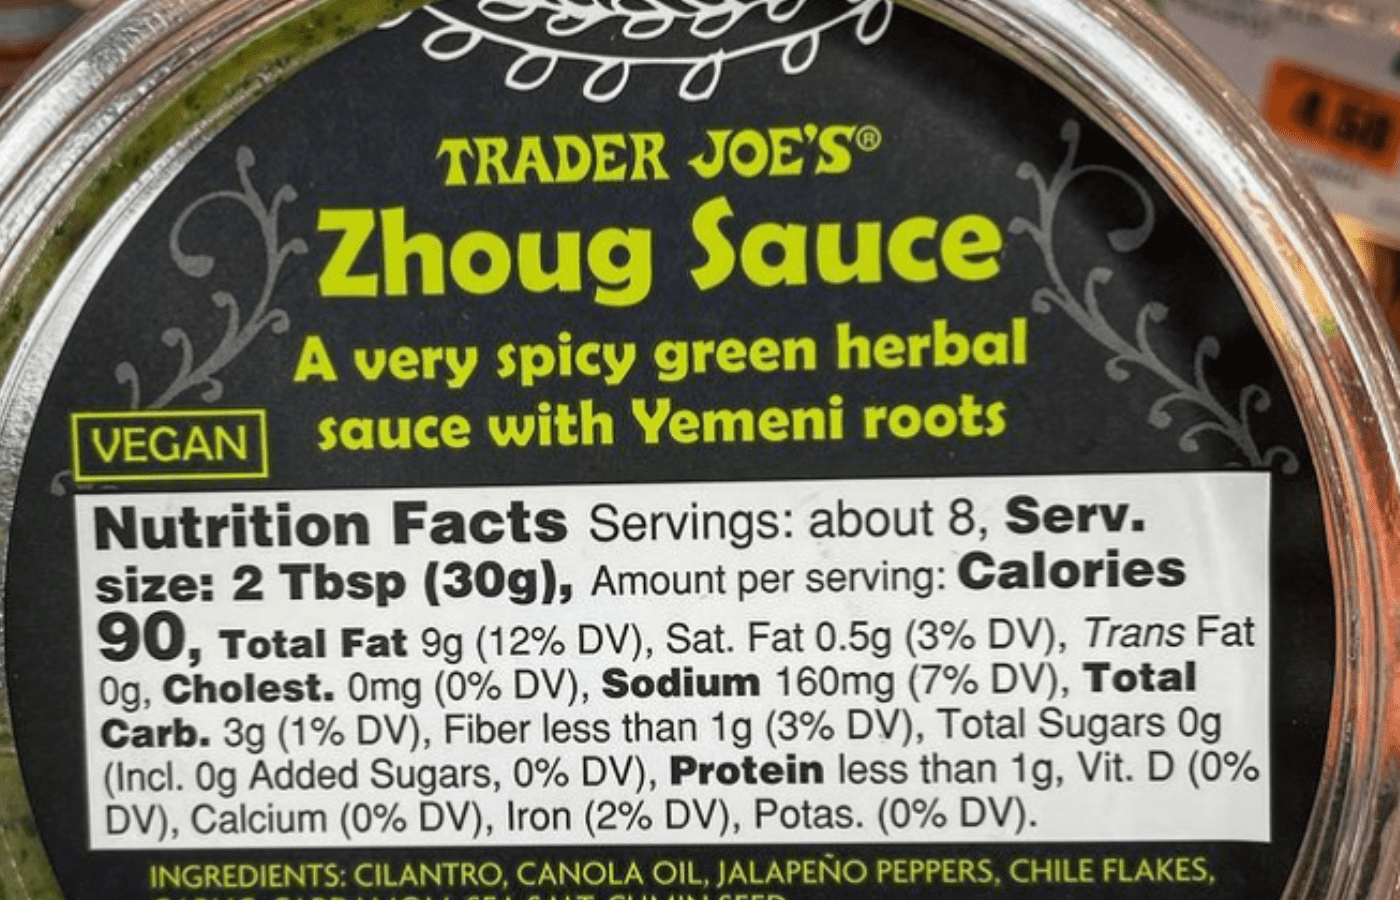 Can You Freeze Trader Joe's Zhoug Sauce